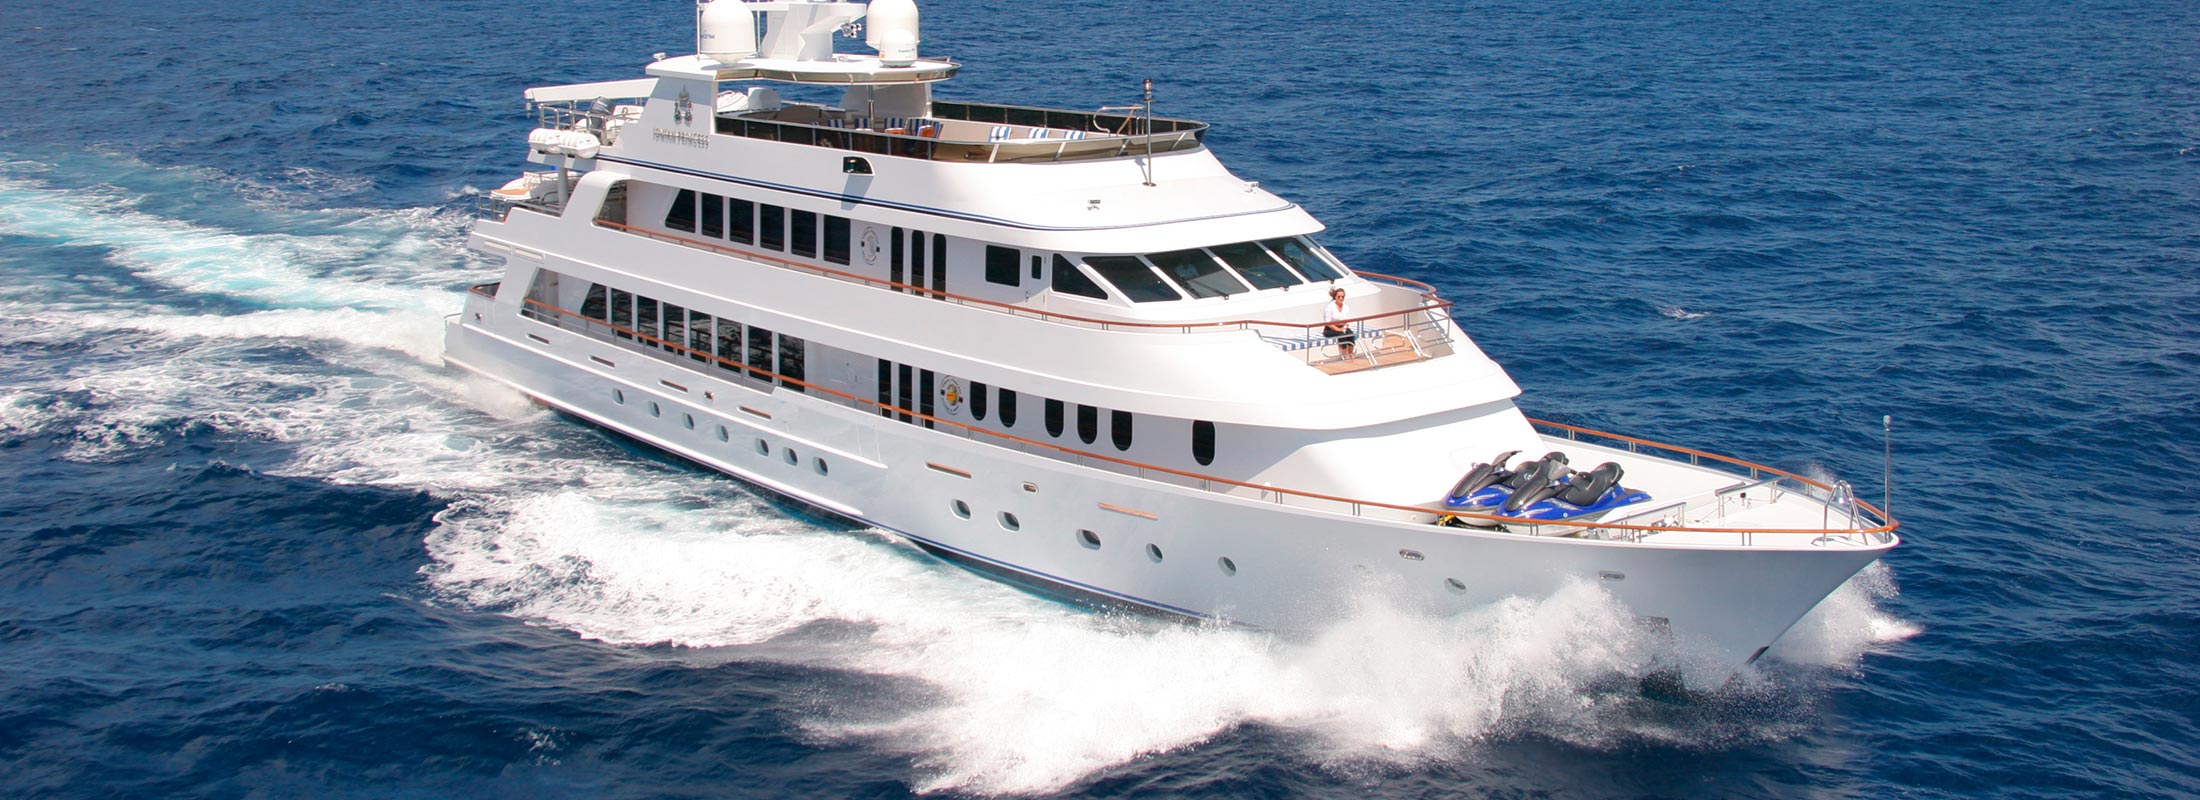 Ionian Princess Motor Yacht for Charter Mediterranean slider 2